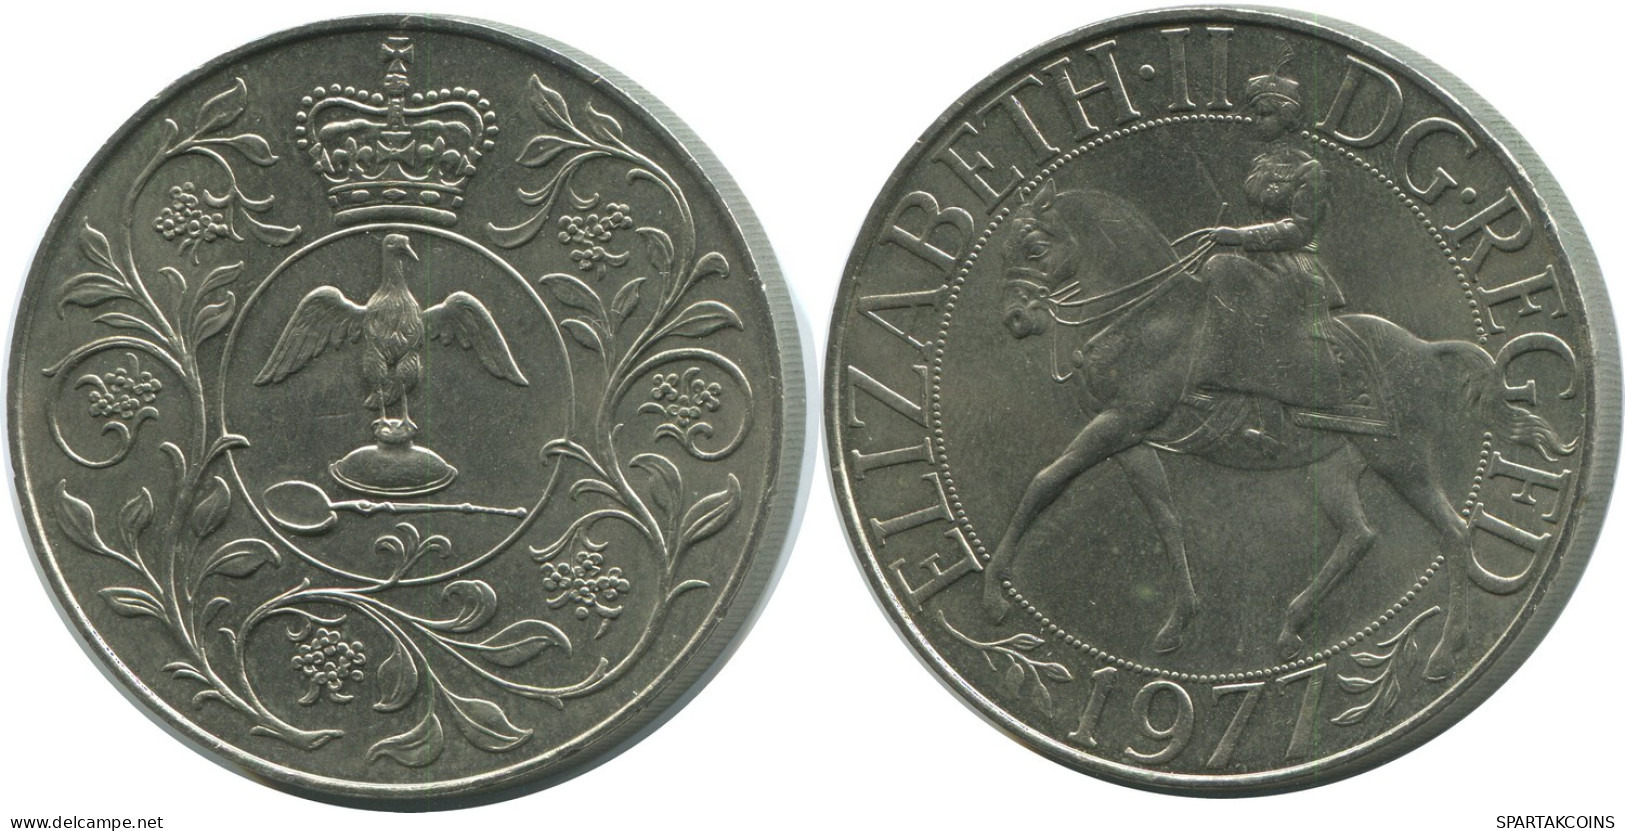 25 NEW PENCE 1977 UK GREAT BRITAIN Coin #AH008.1.U - 25 New Pence